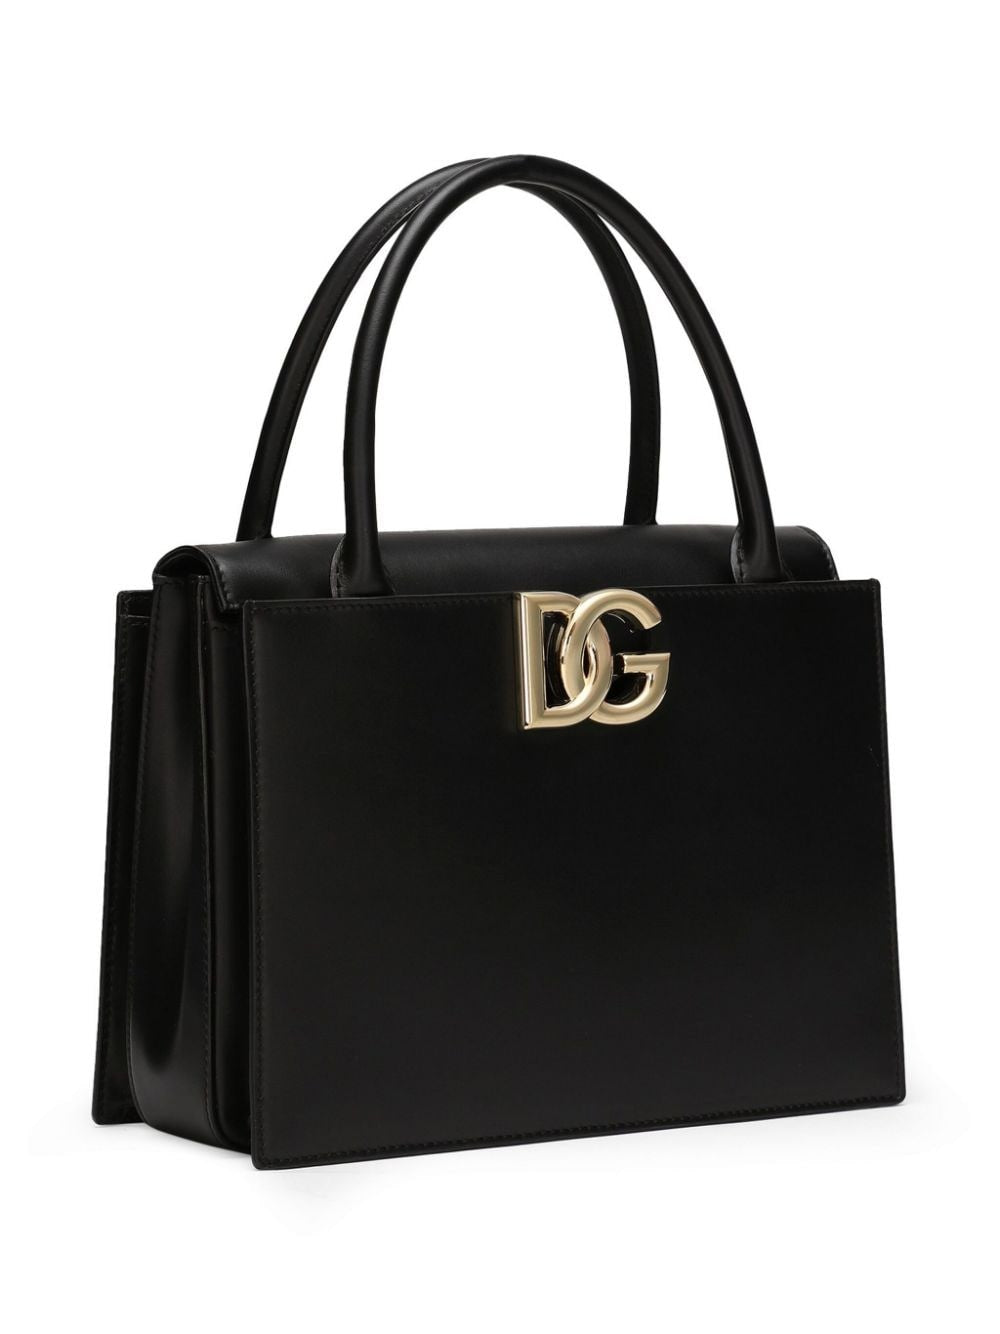 Dolce & Gabbana Logo-Plaque Leather Tote Bag in Black